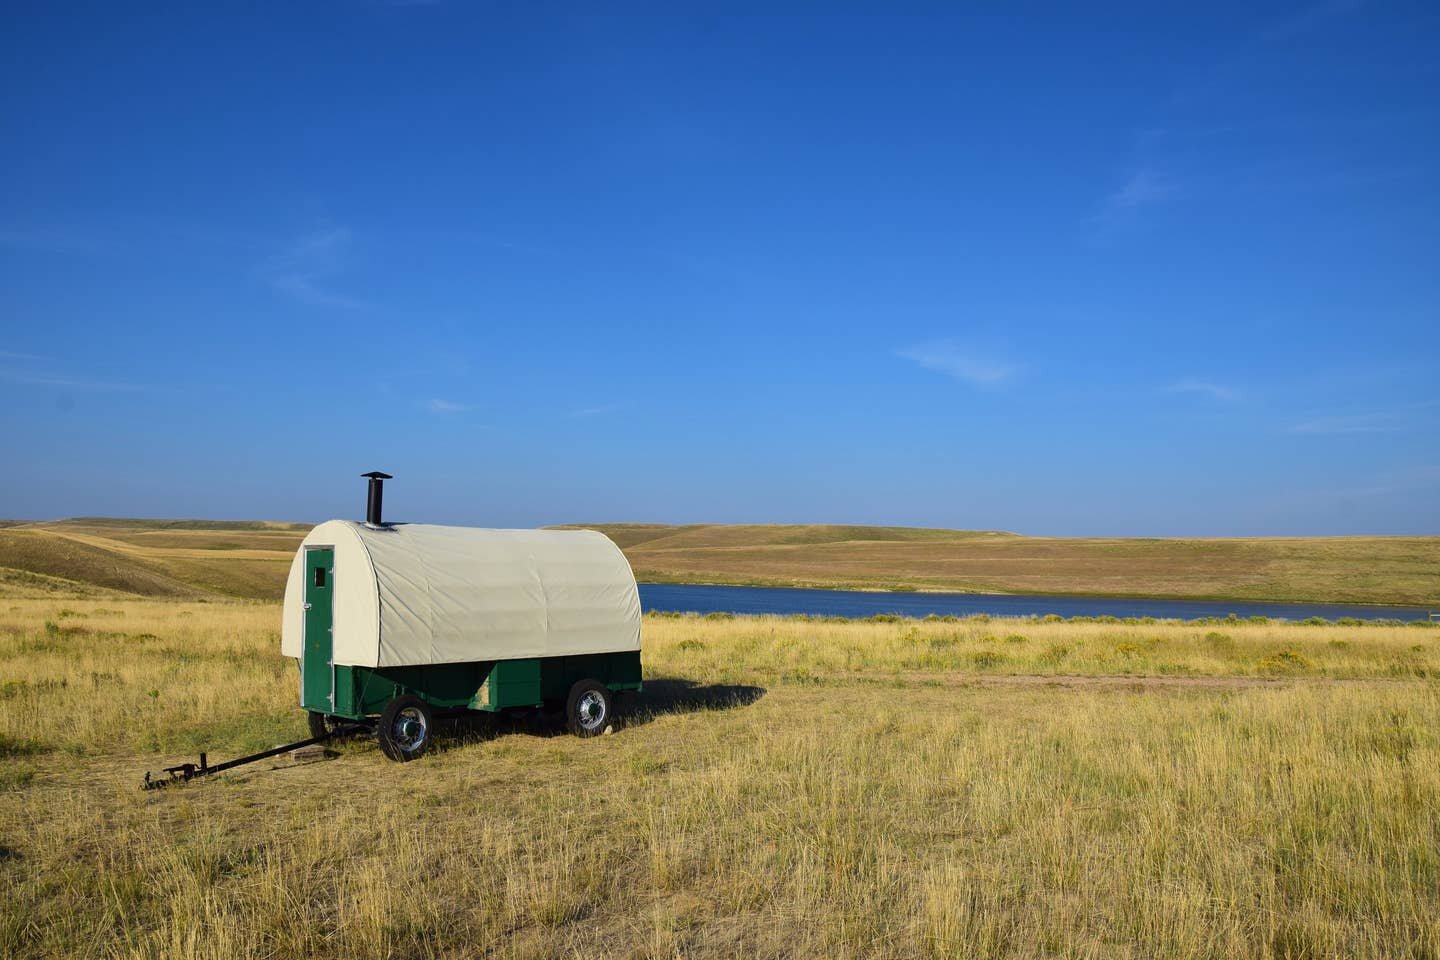 Heward's Fully Restored 1920's Sheep Wagon - Airbnb - Shirley Basin, Wyoming